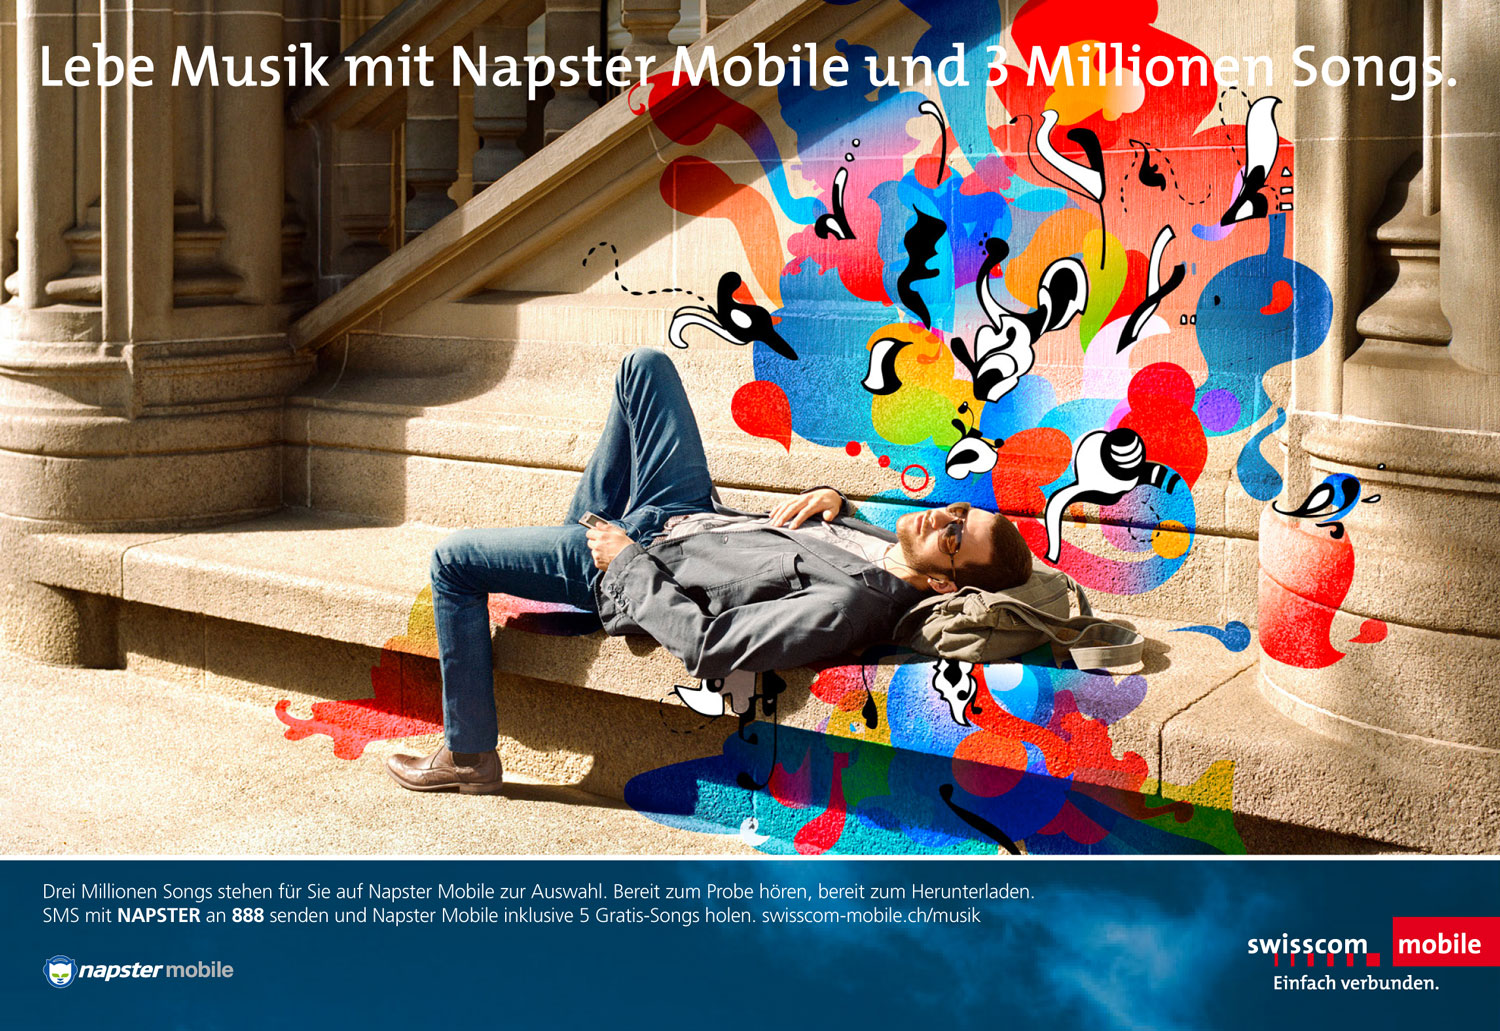 Swisscom_Napster-1.jpg